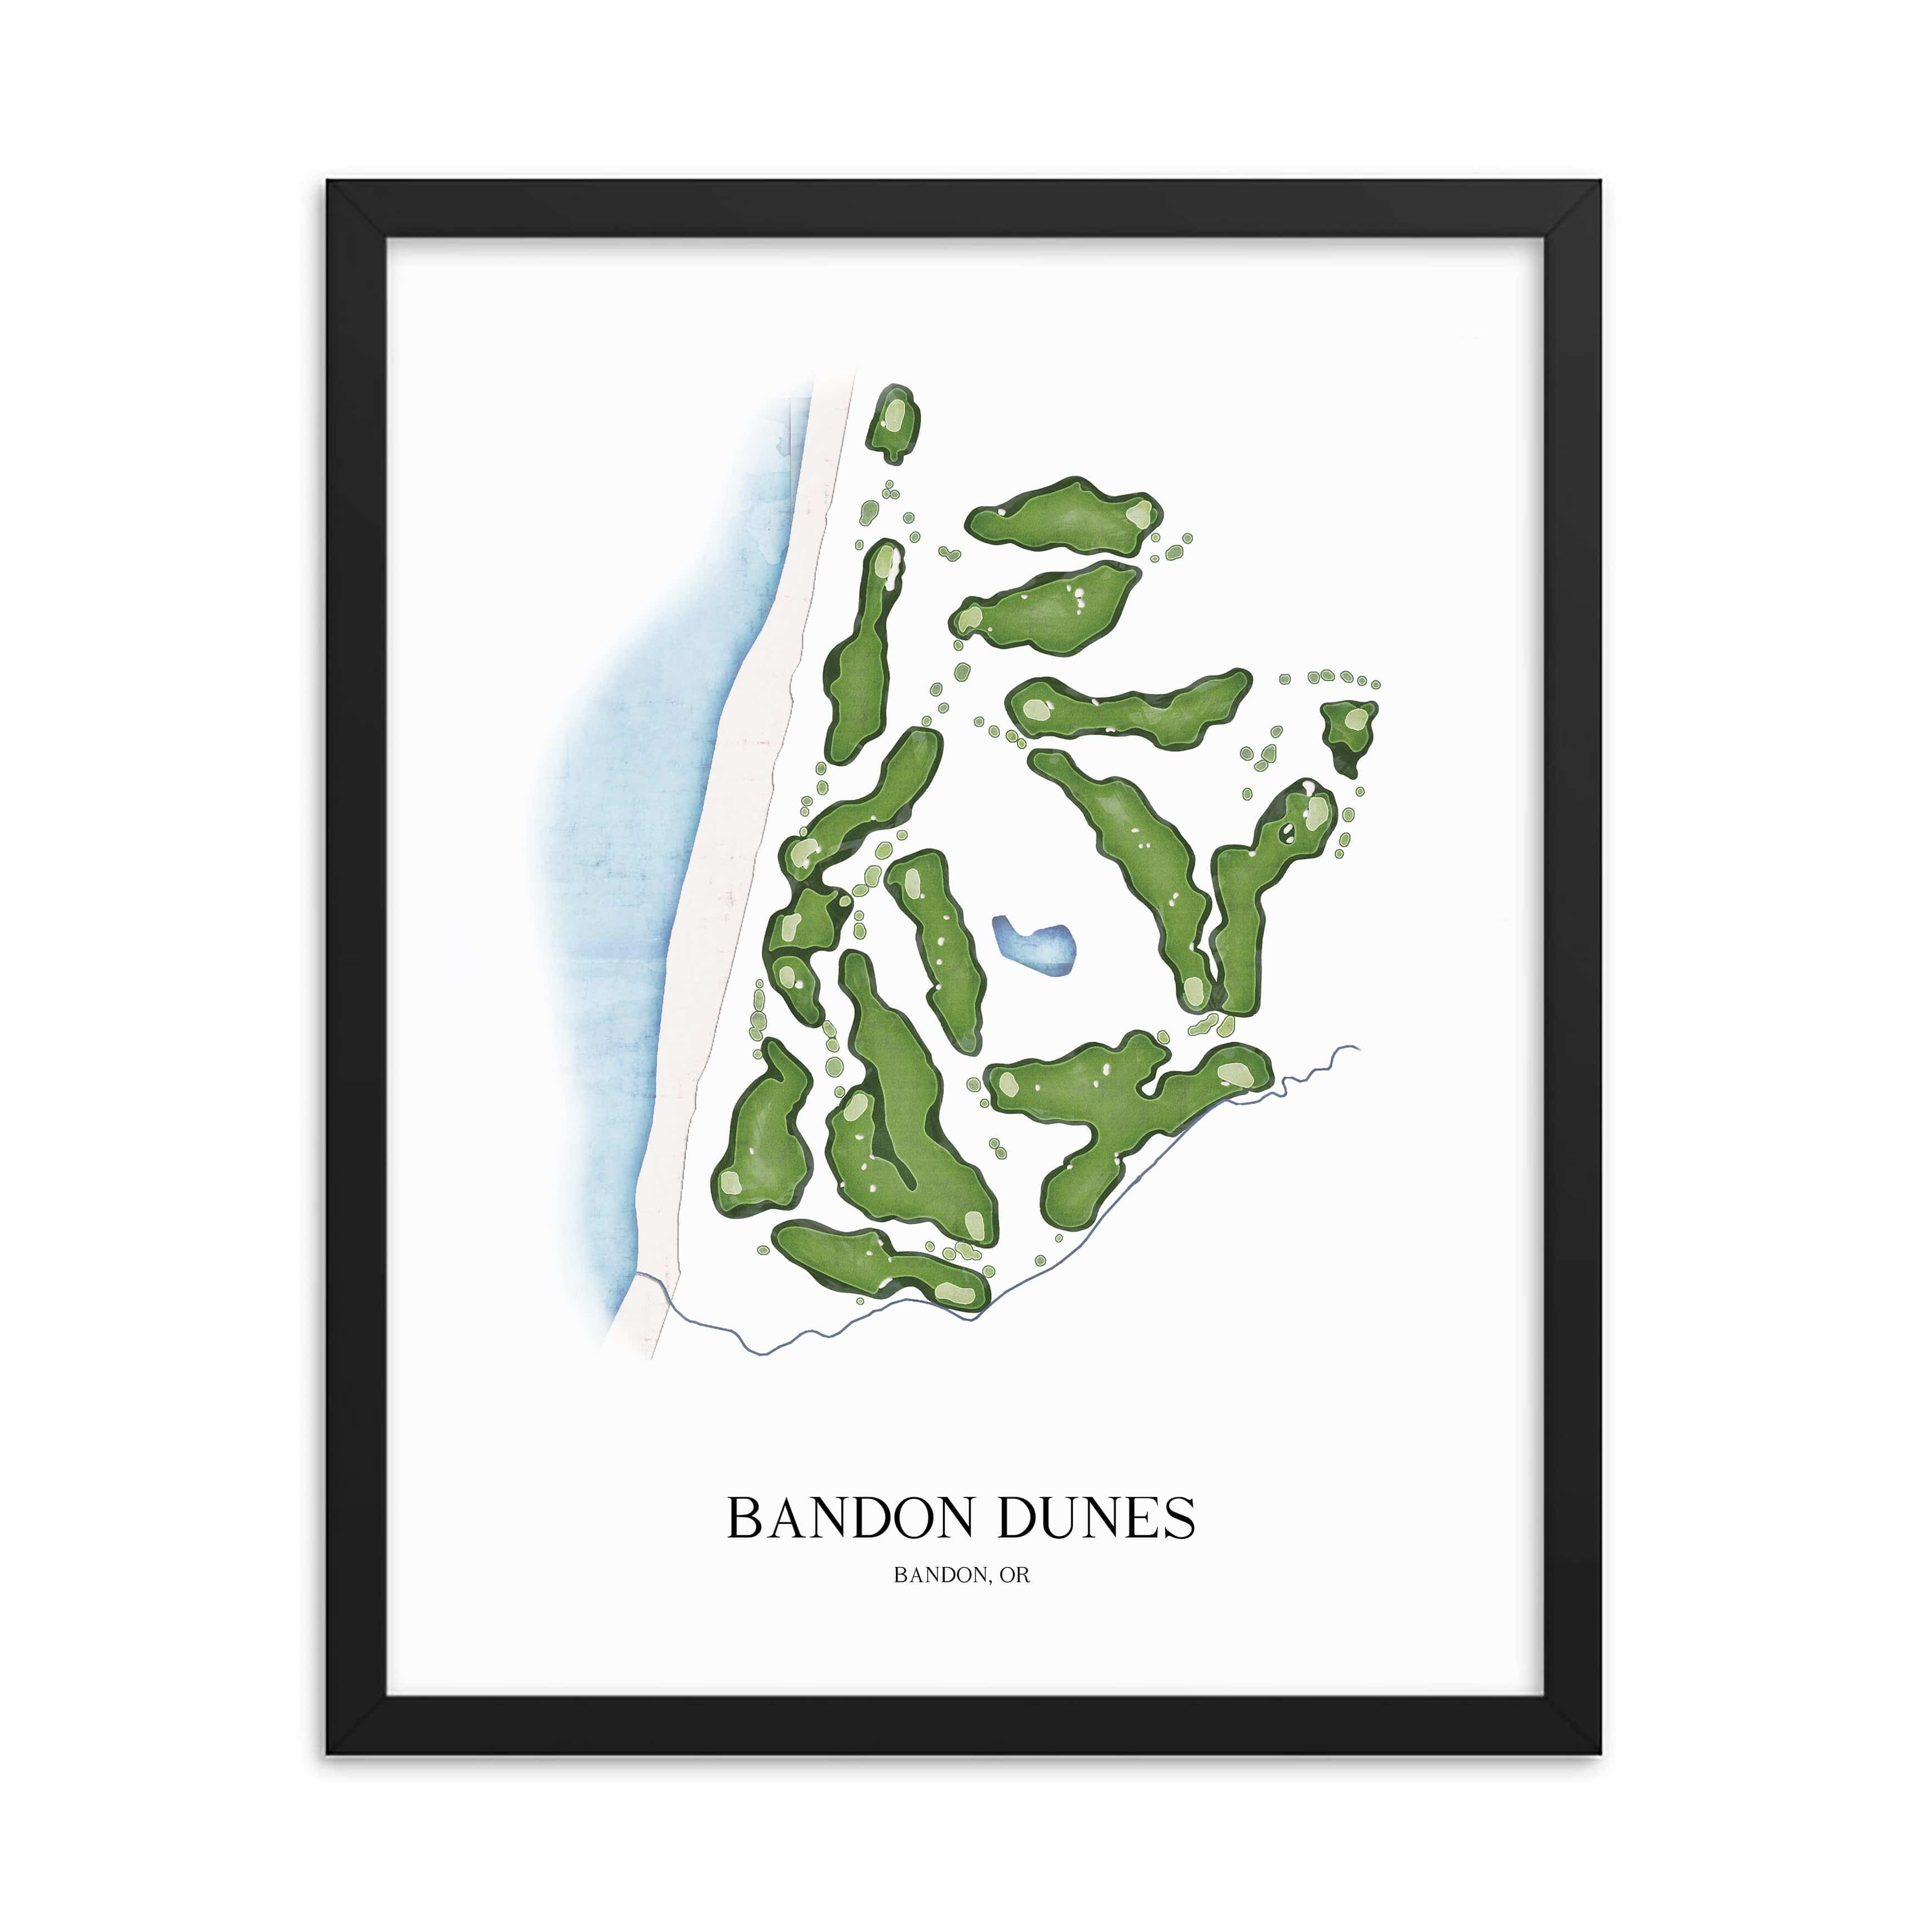 The 19th Hole Golf Shop - Golf Course Prints -  8" x 10" / Black Bandon Dunes Golf Course Map